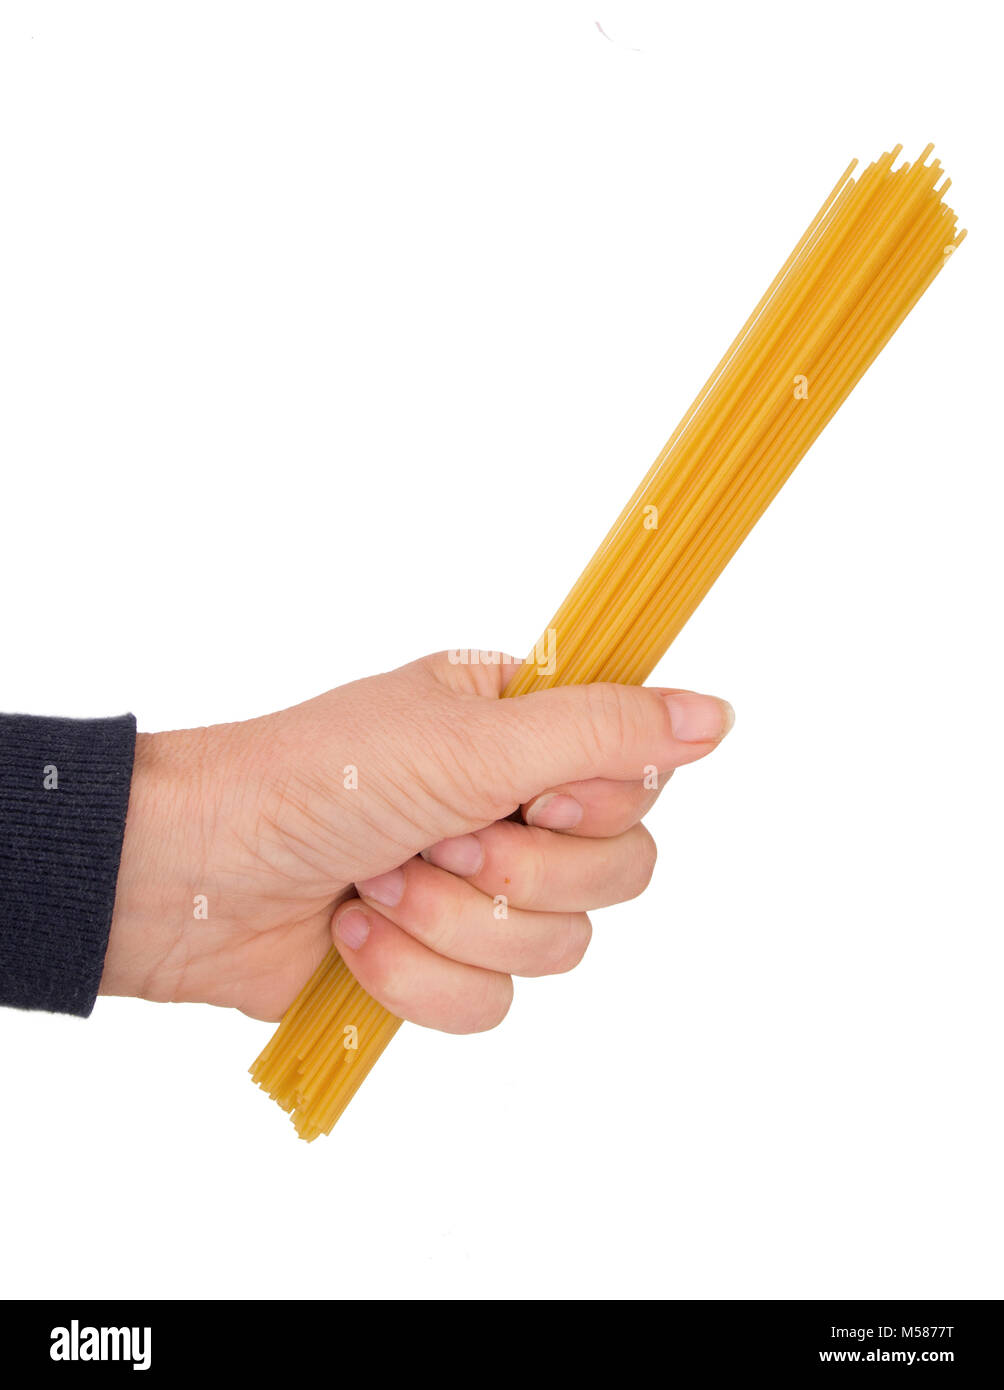 Hand with gluten free spaghetti. Stock Photo